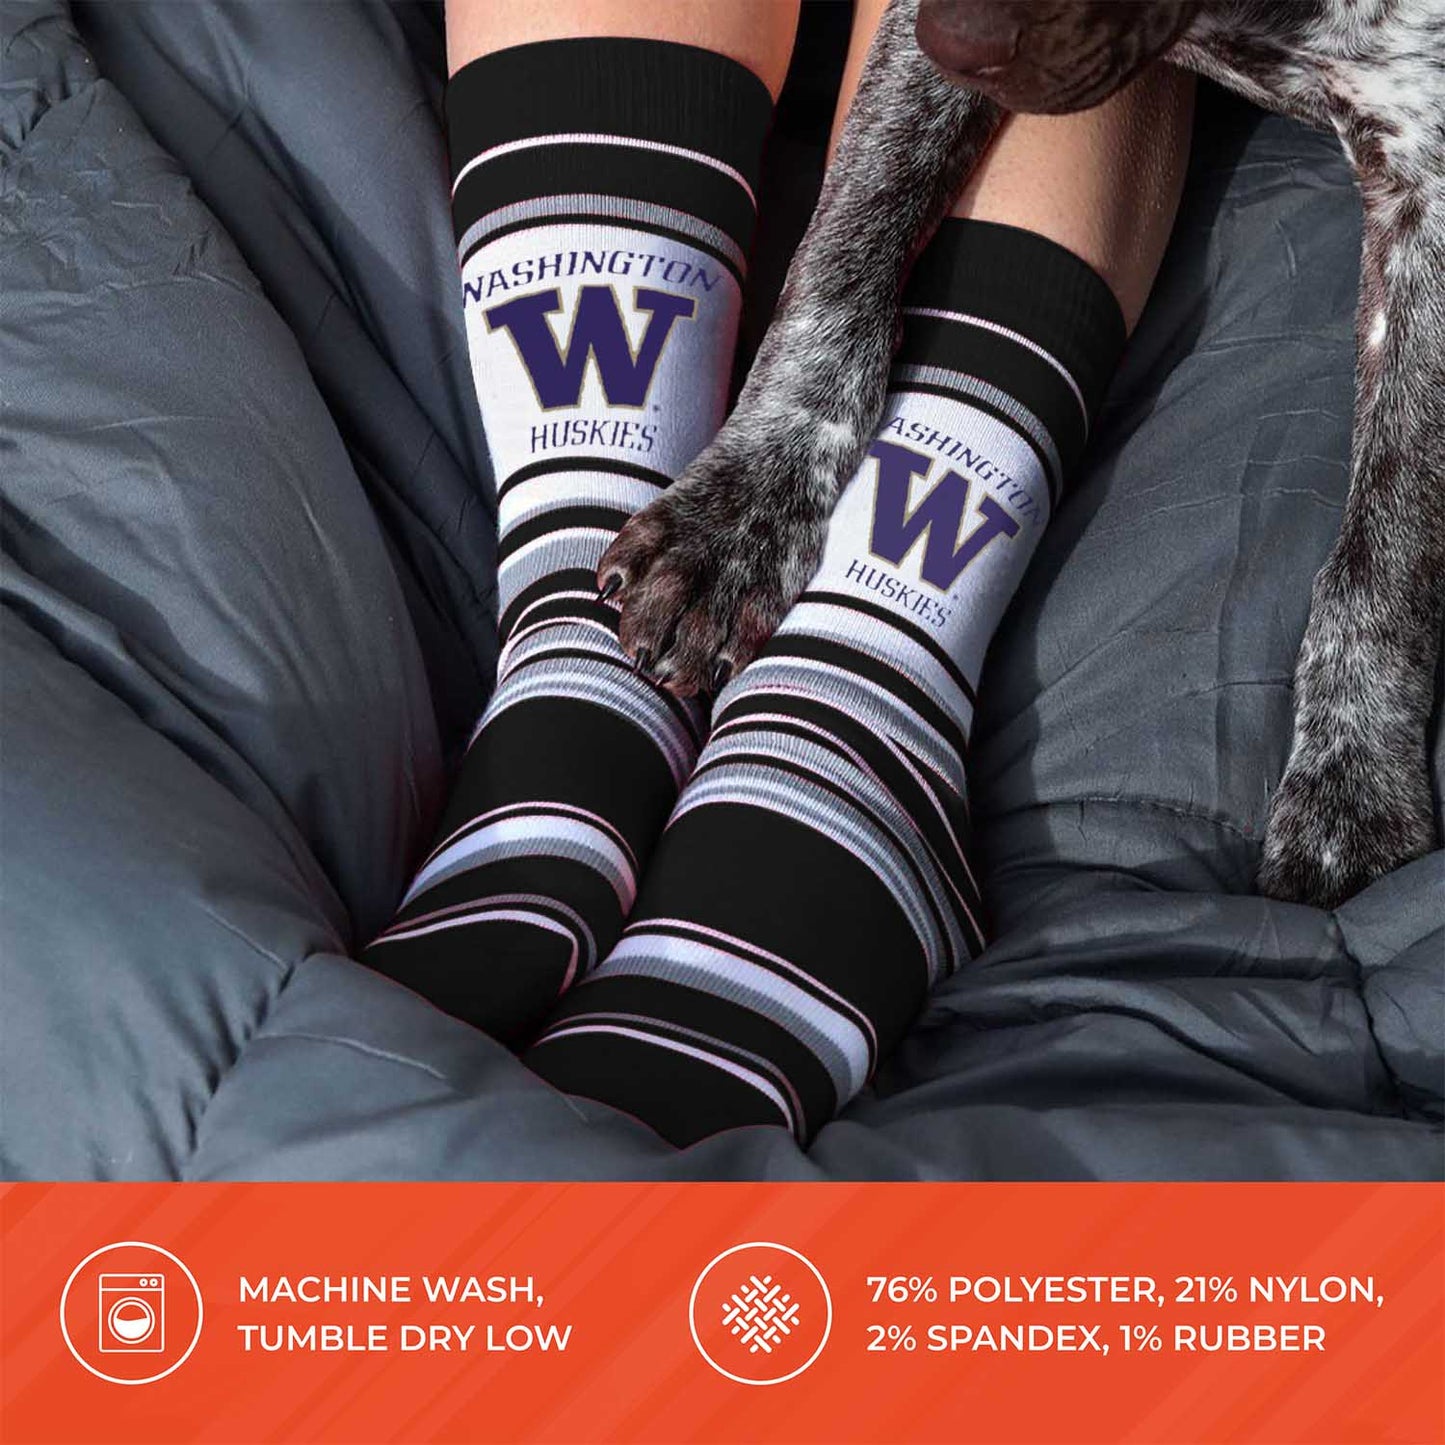 Washington Huskies Collegiate University Striped Dress Socks - Black